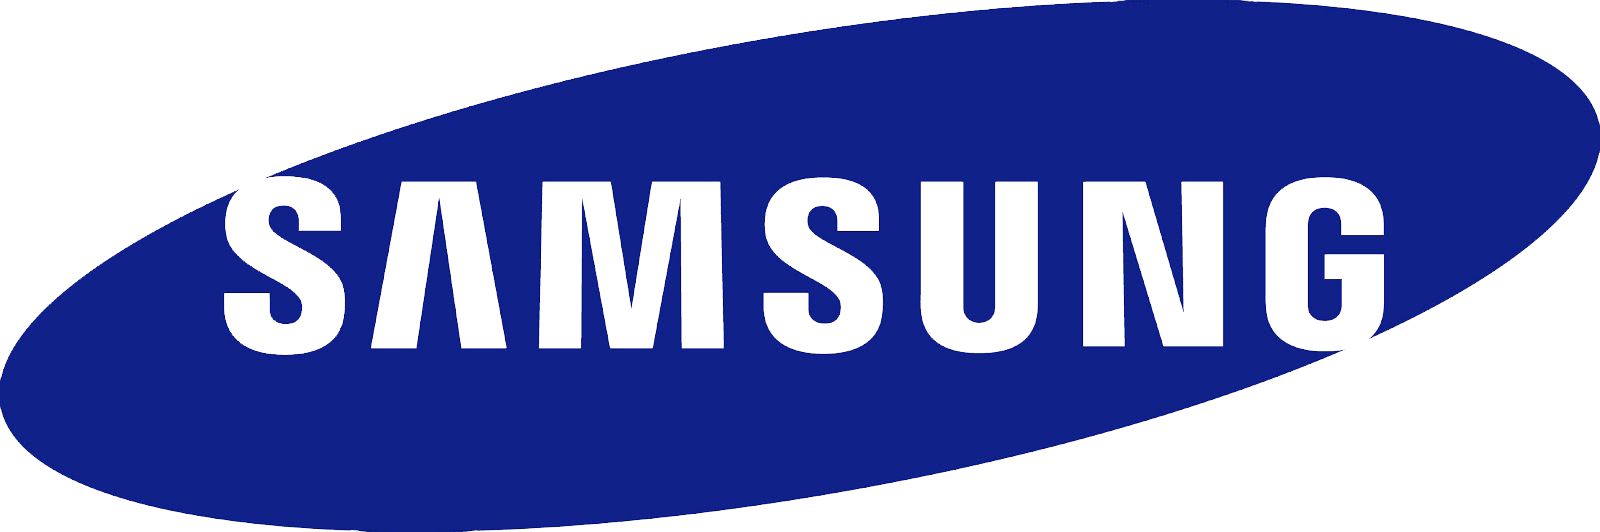 Samsung_Logo.png